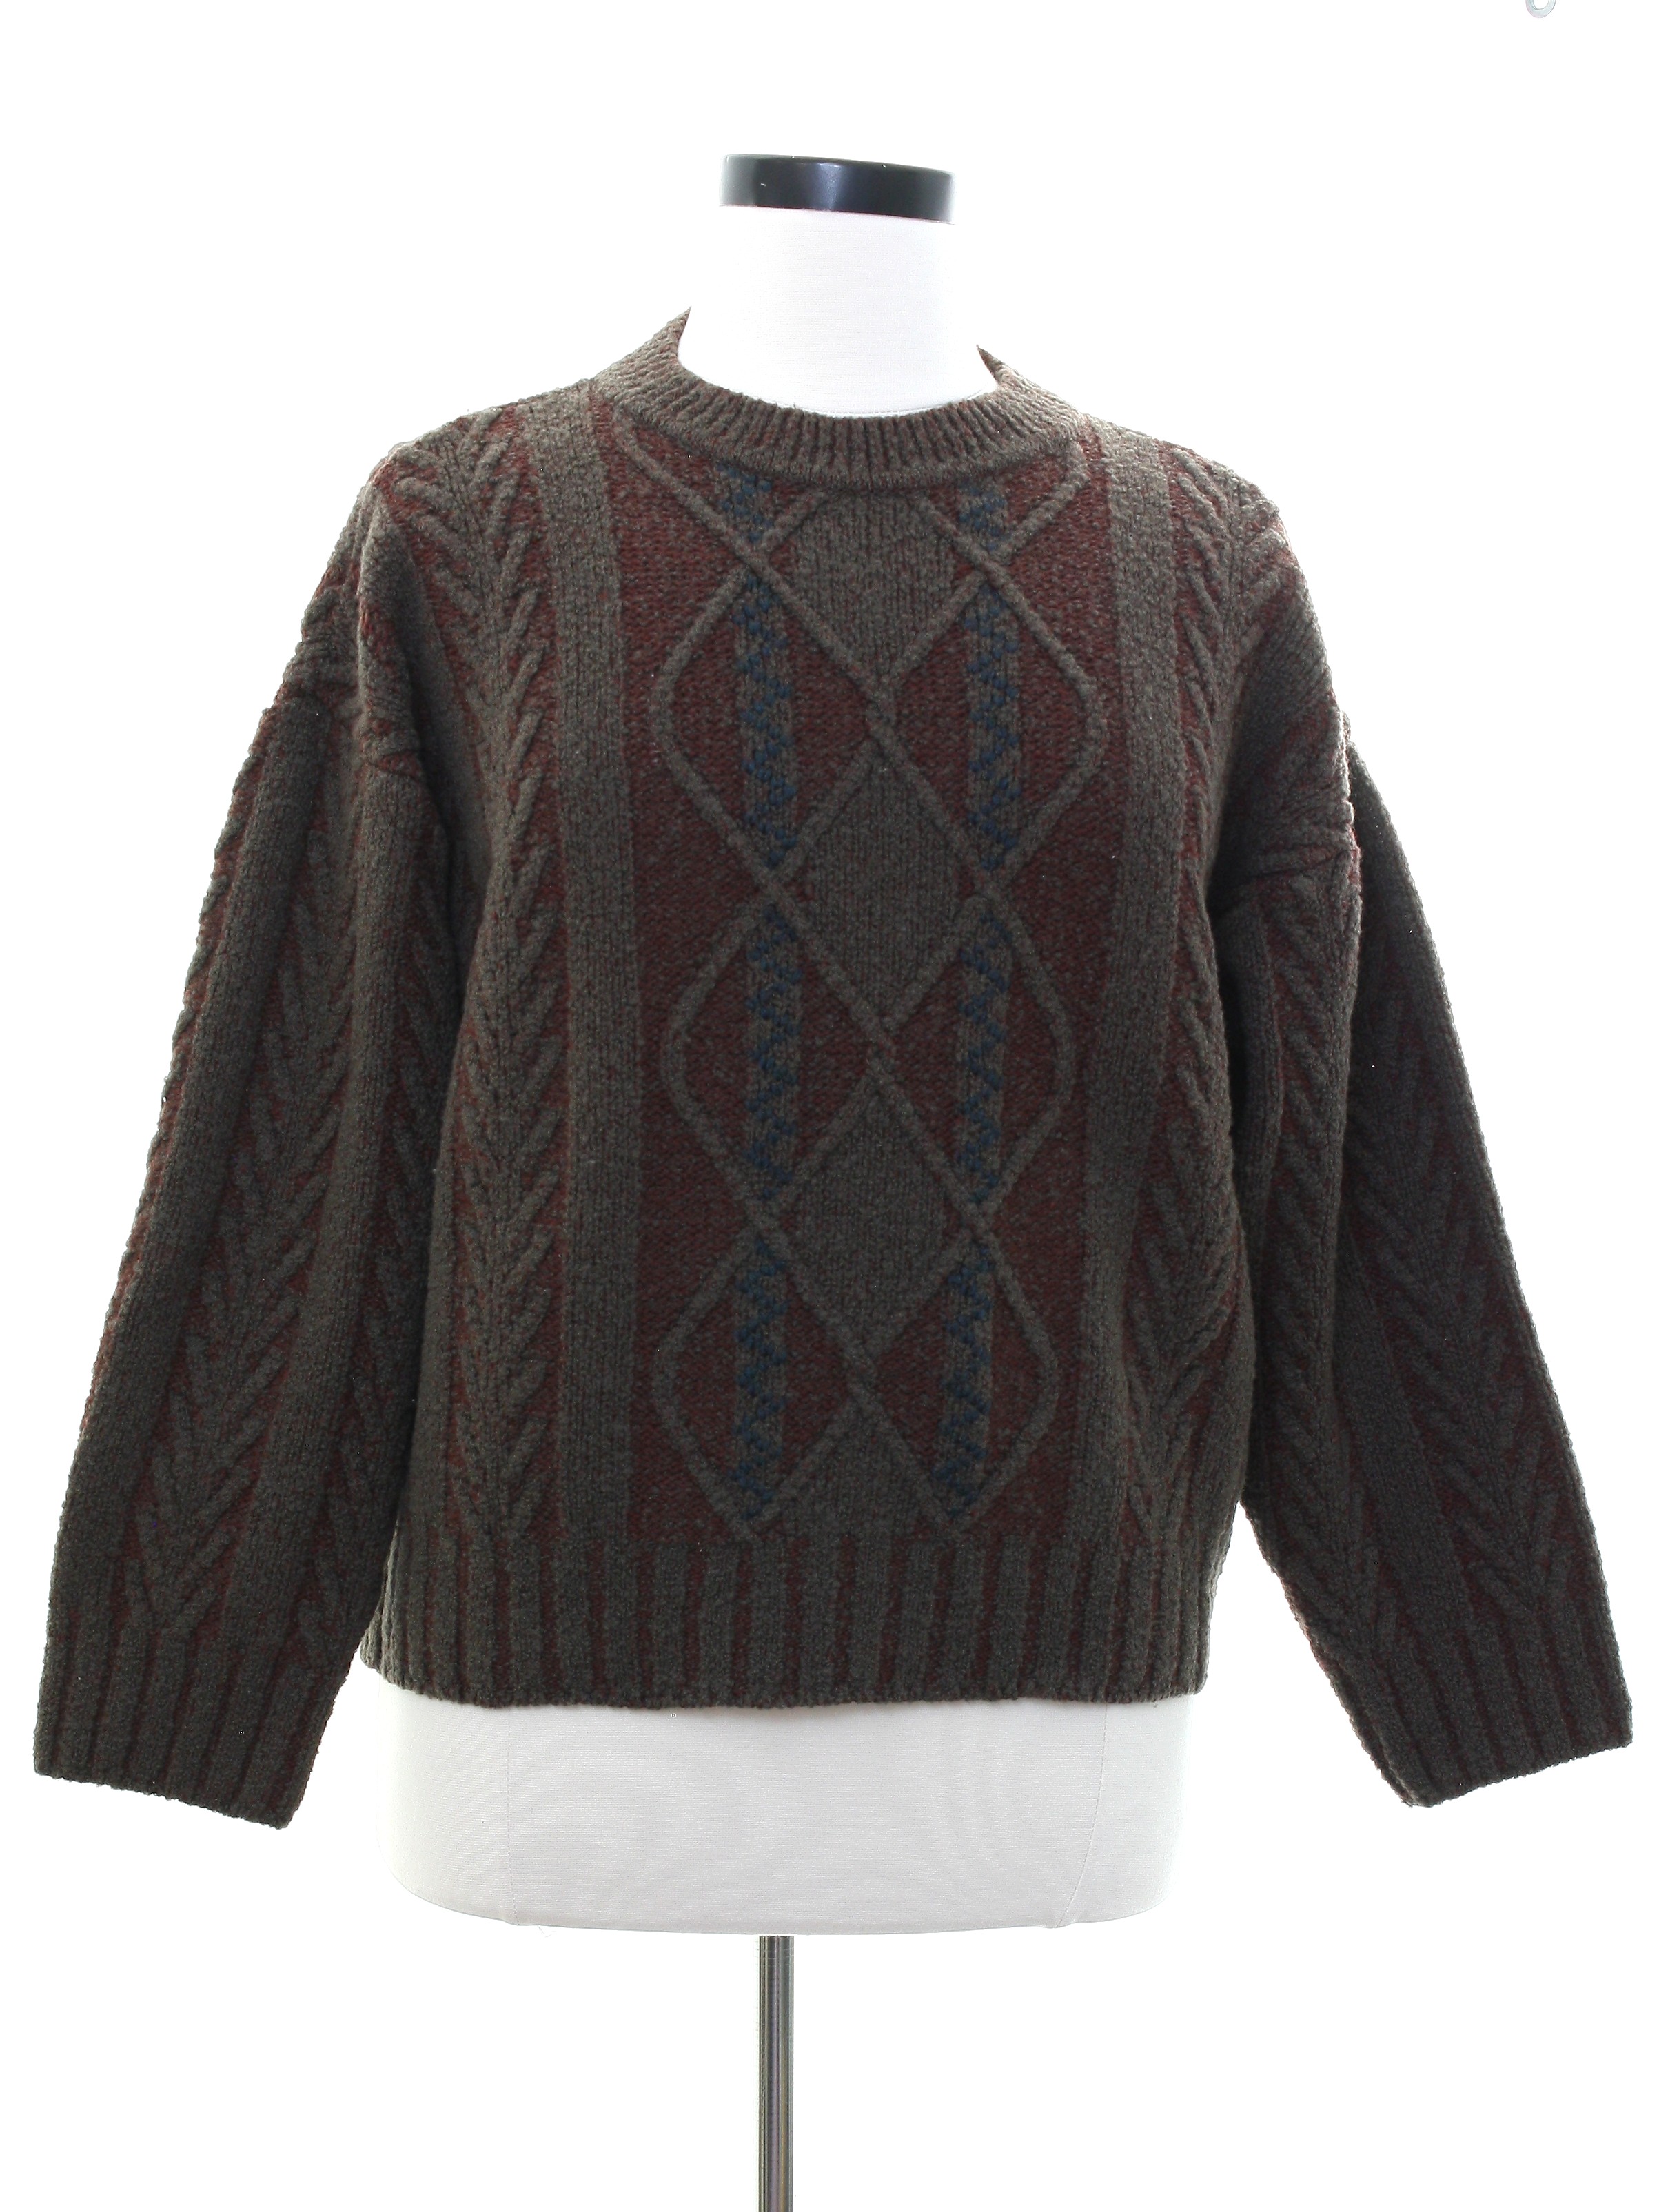 80s Salvatore Ferragamo vintage knit